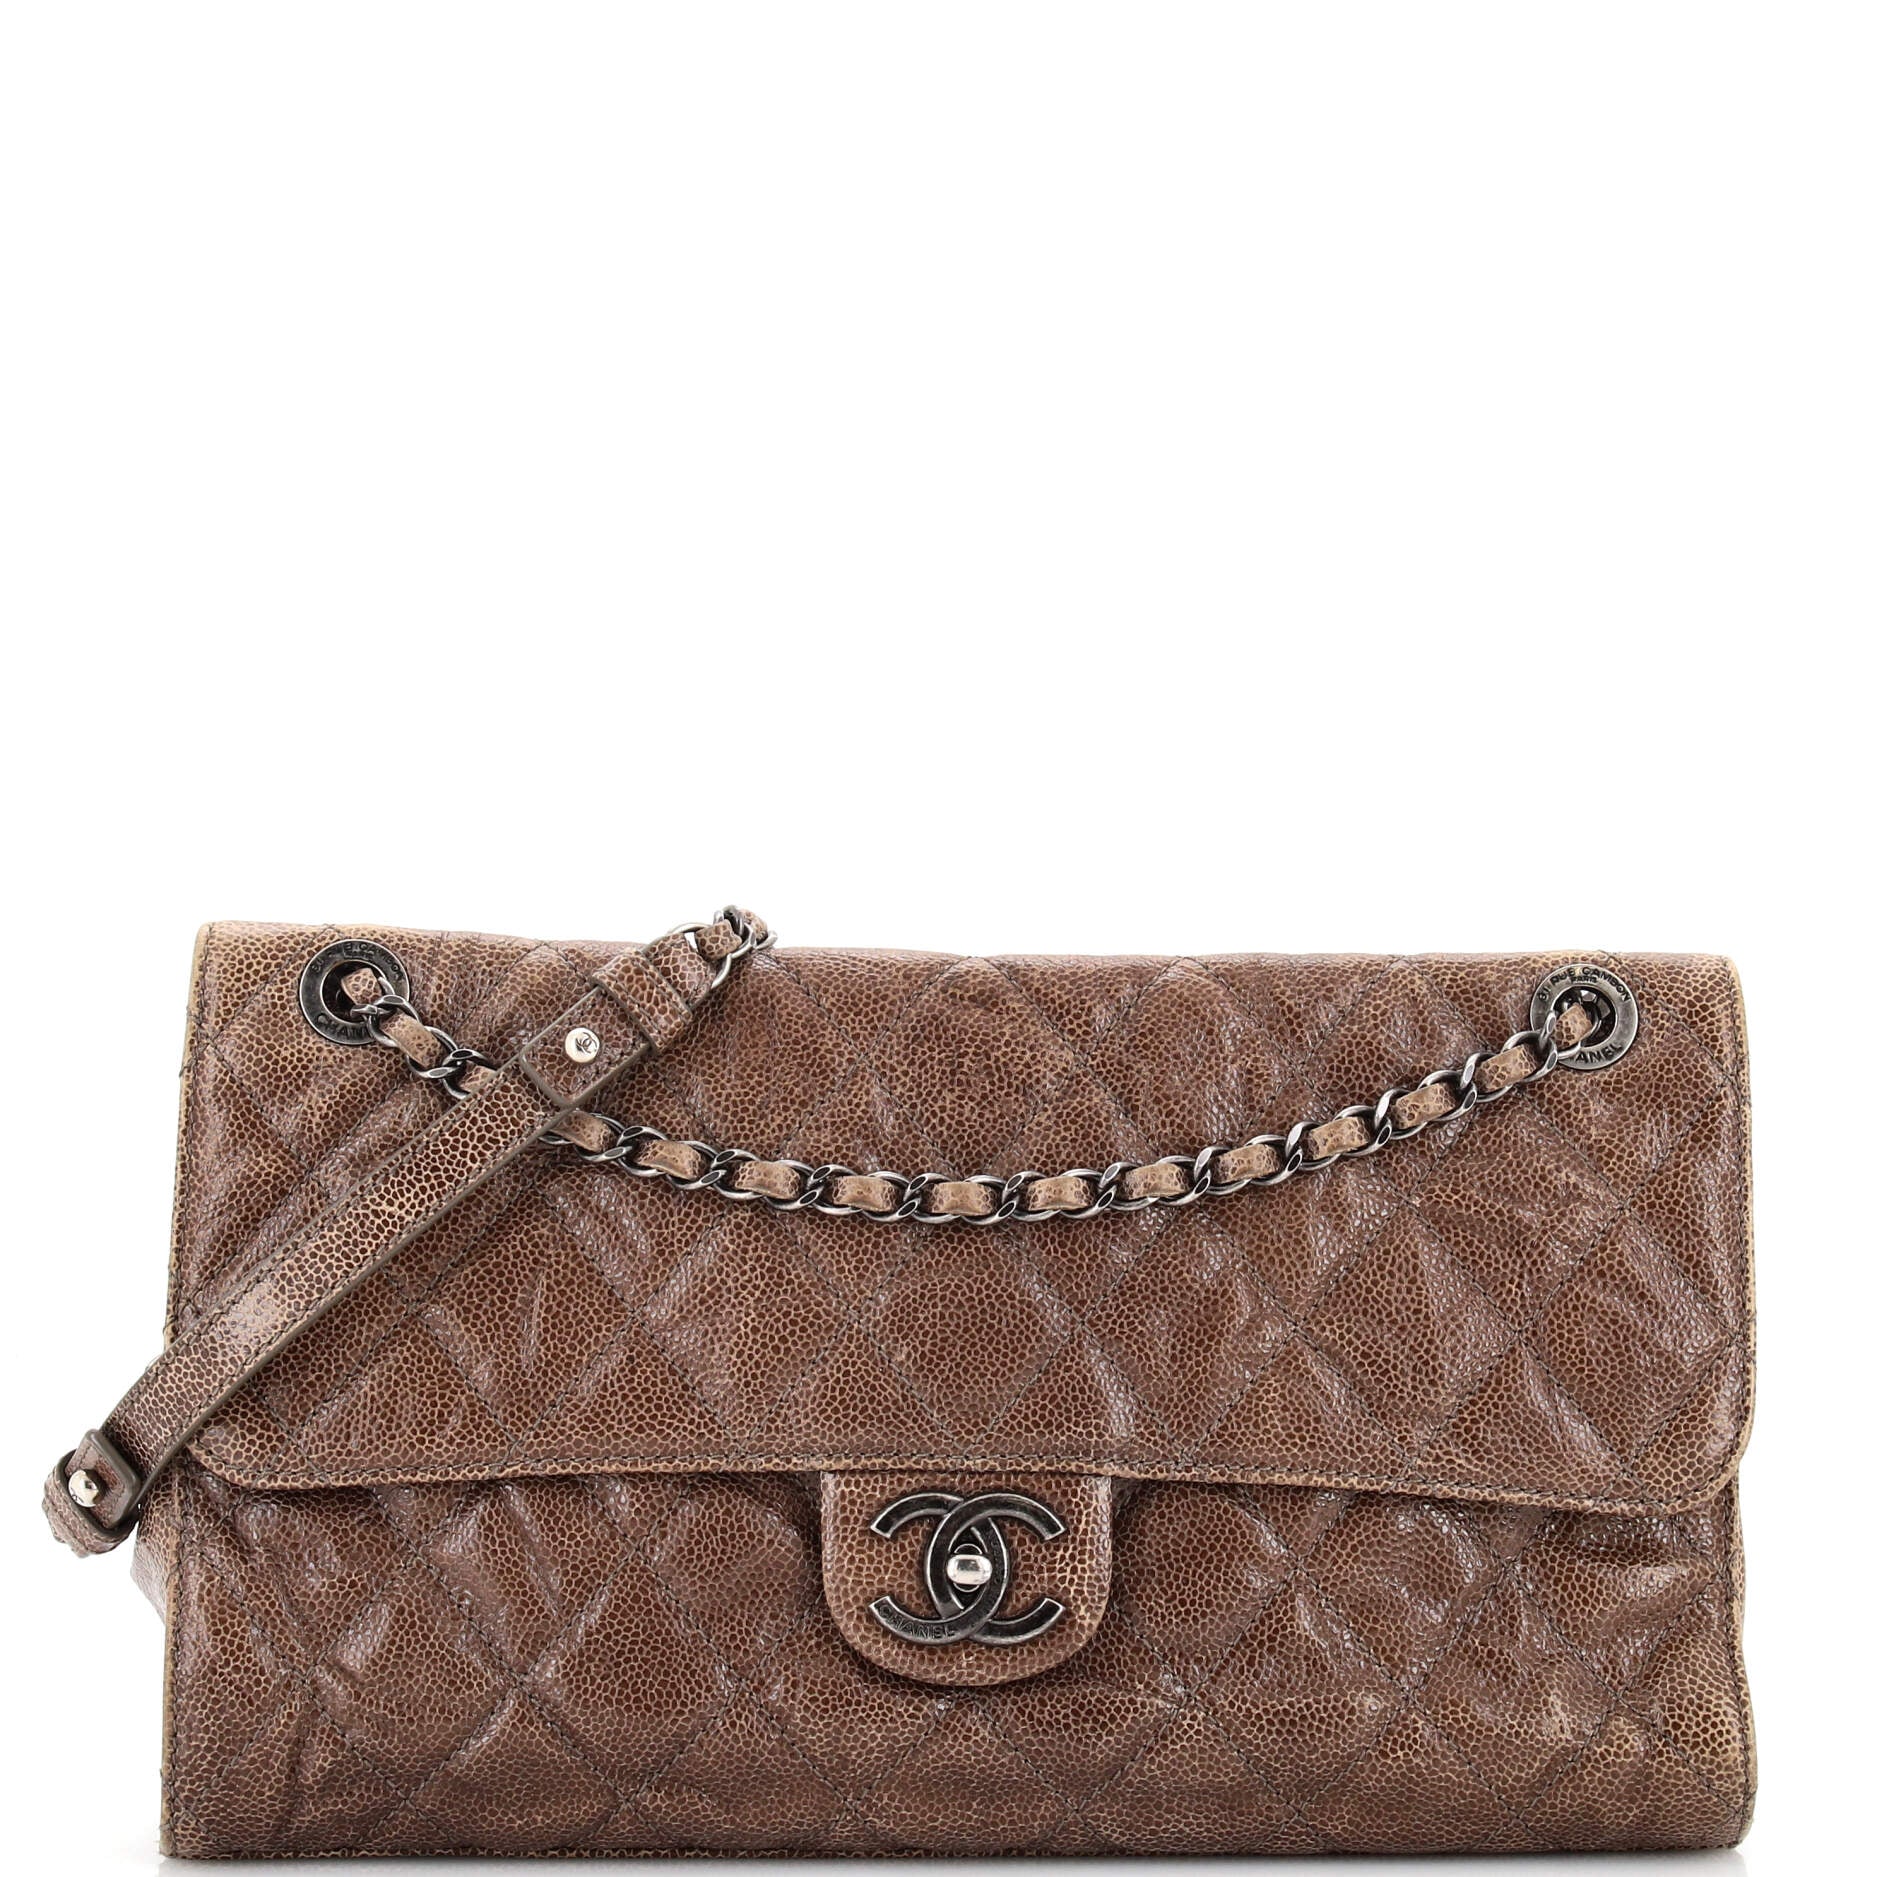 chanel purse strap leather